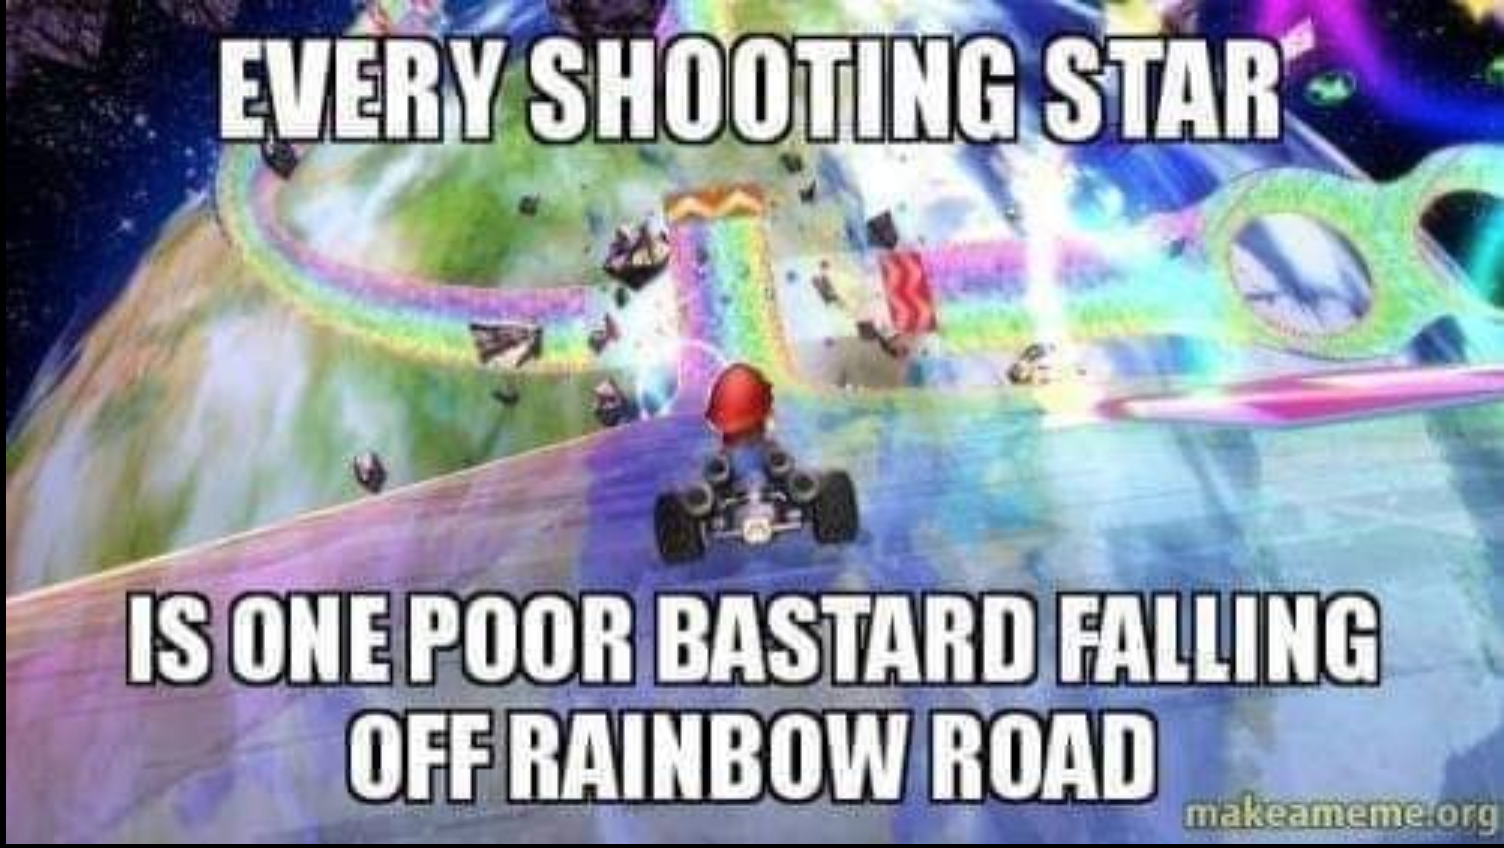 funny gaming memes - shooting star mario kart meme - Every Shooting Star Is One Poor Bastard Falling Off Rainbow Road makeameme.org